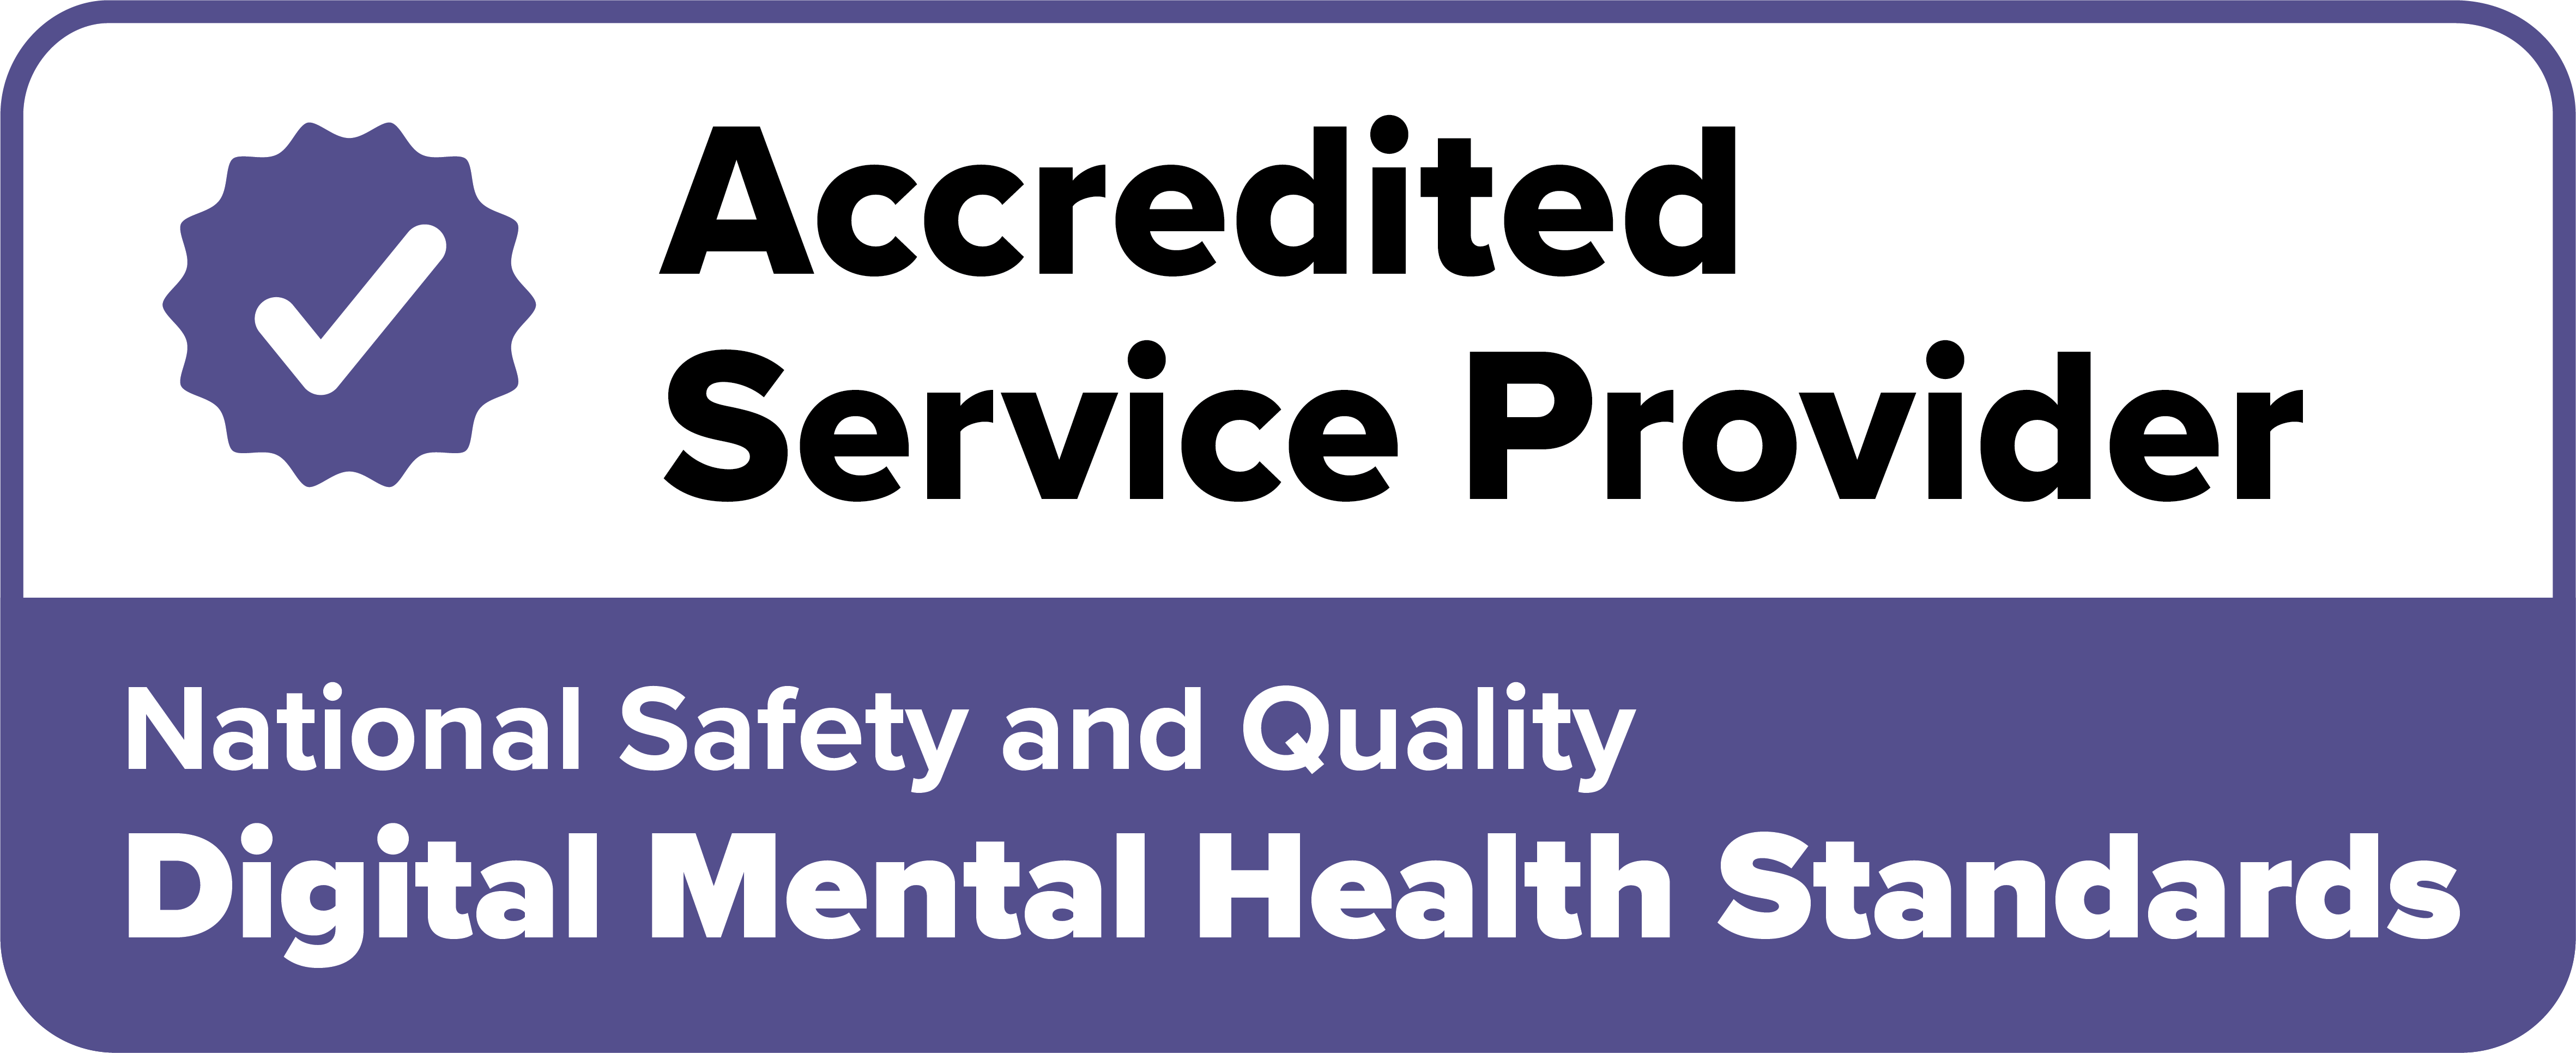  NSQDMH Standards accreditation badge